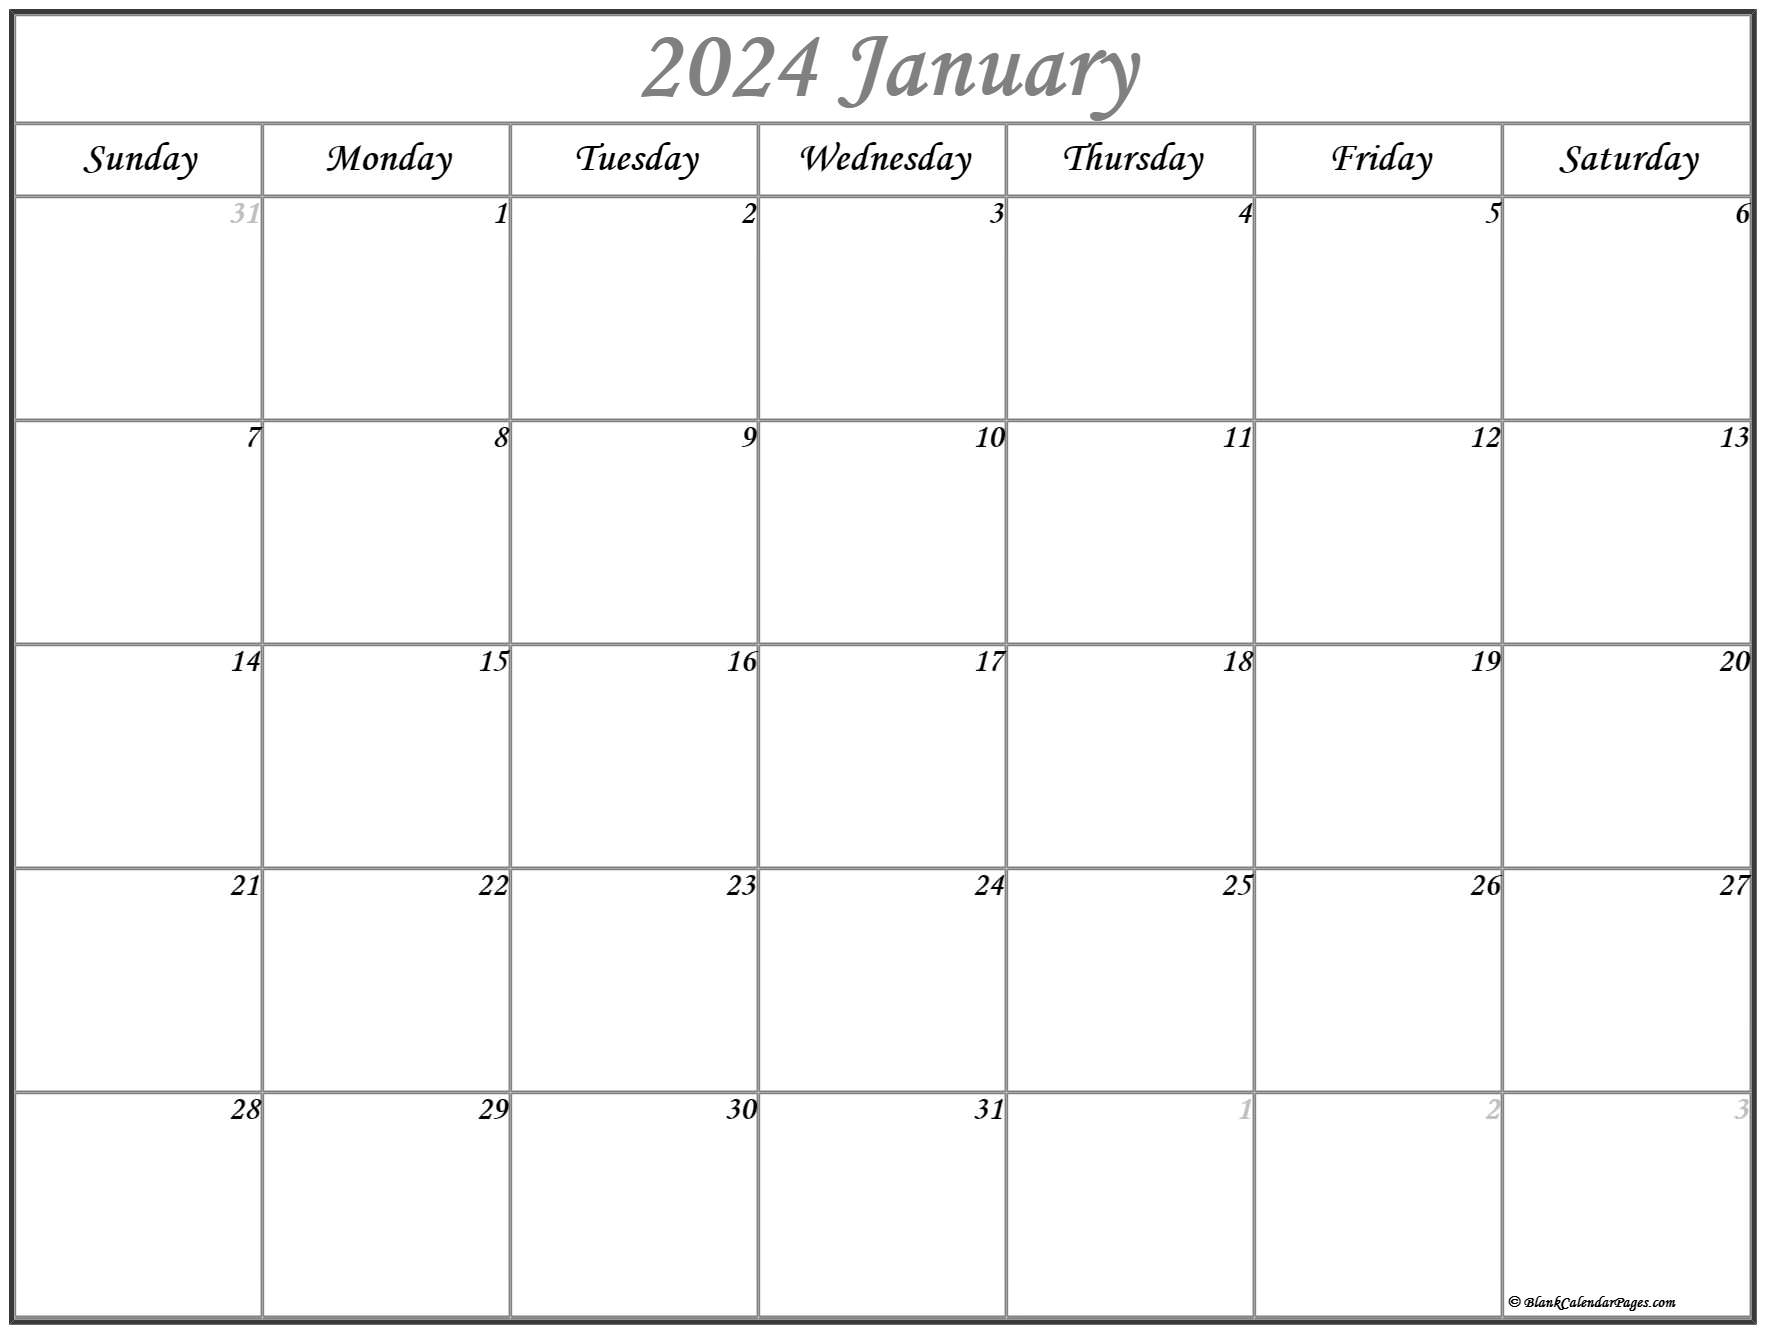 2024 Monthly Calendar Pdf Free Printable Templates 2024 Monthly - Free Printable 2024 Monthly Calendar Planner